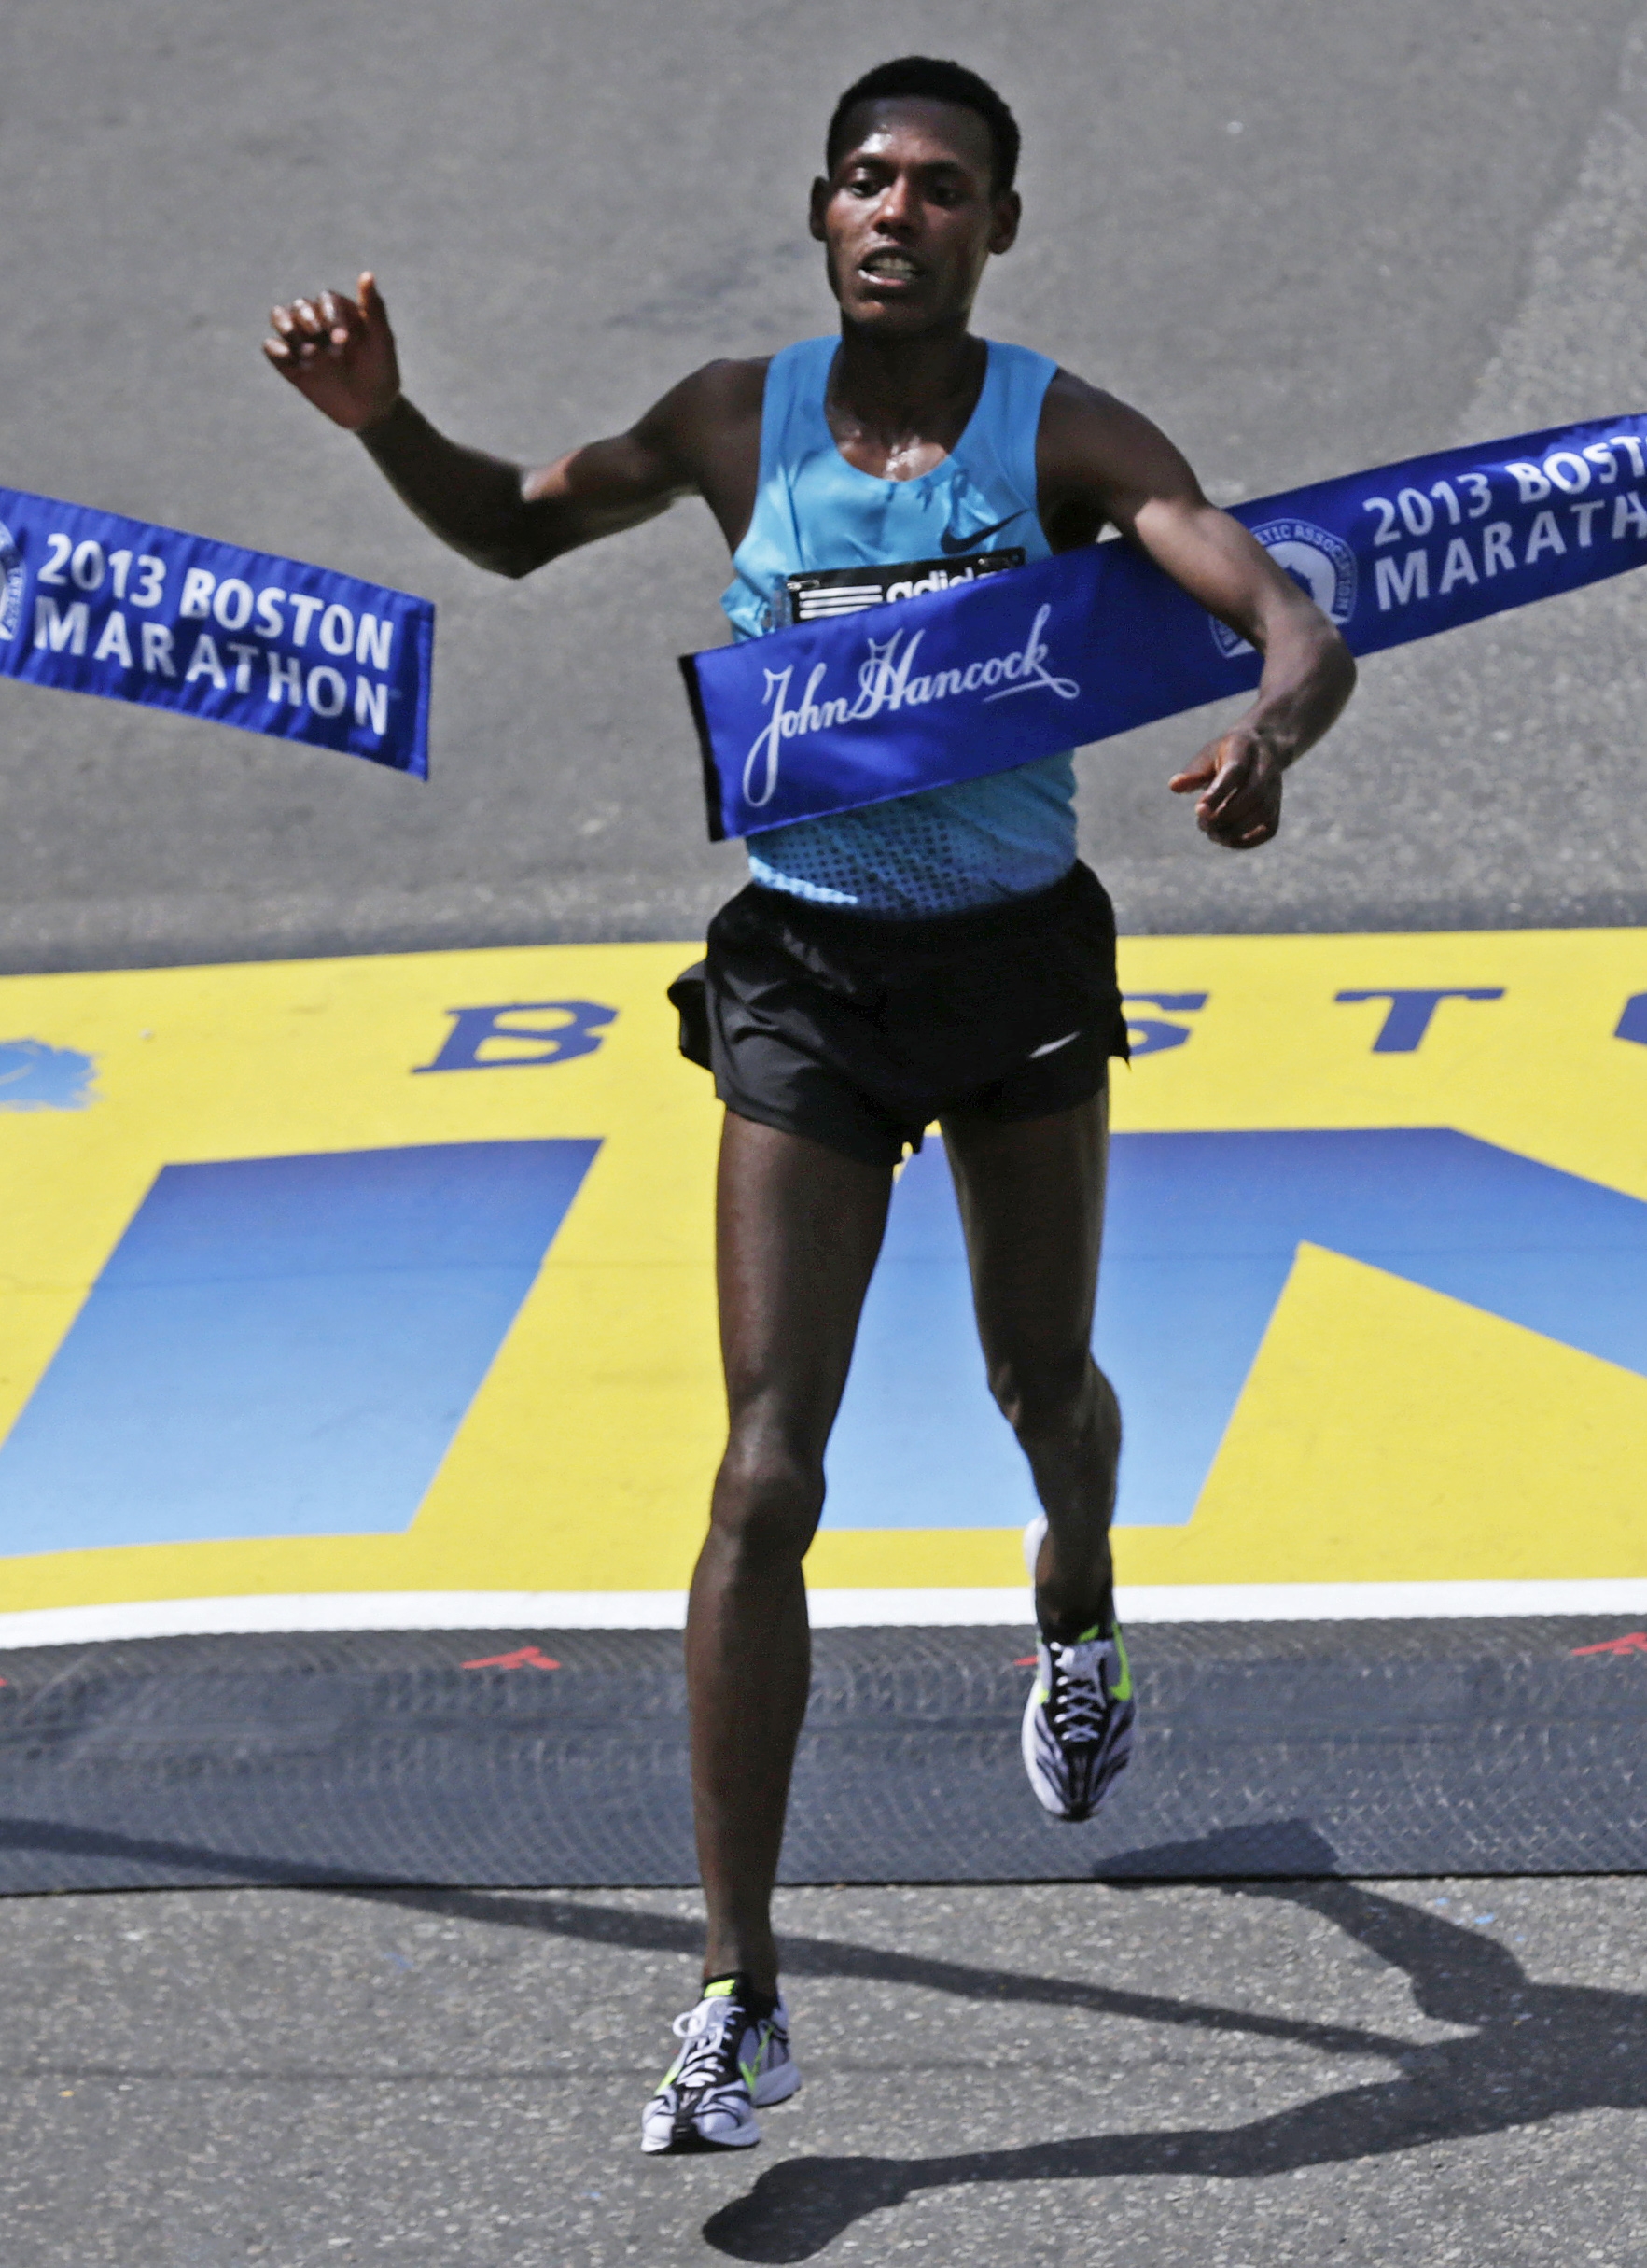 Boston Marathon winner presents his medal to city - The Blade